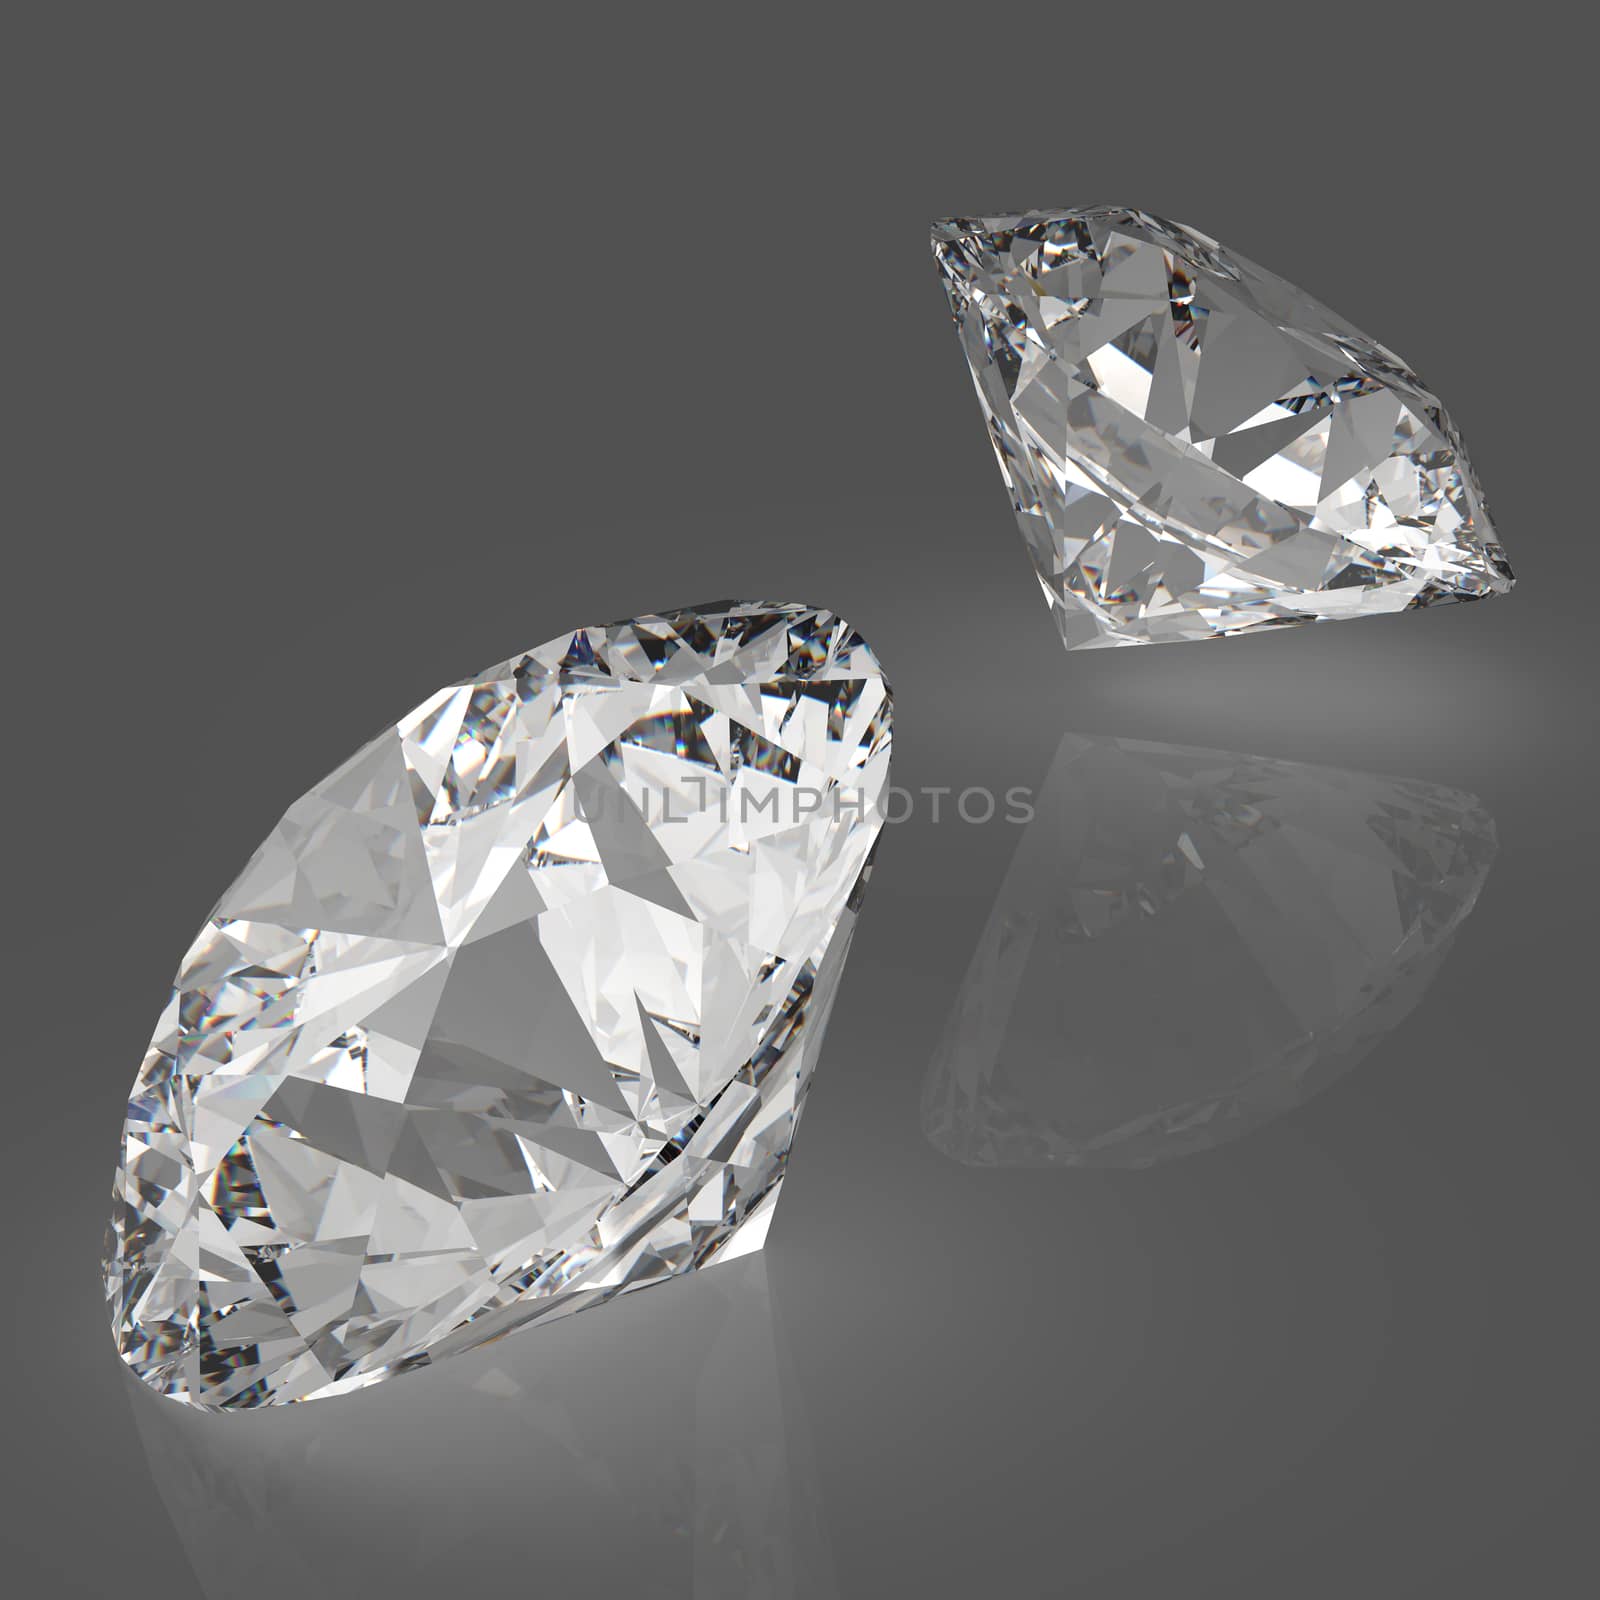 Diamonds 3d model in composition as concept